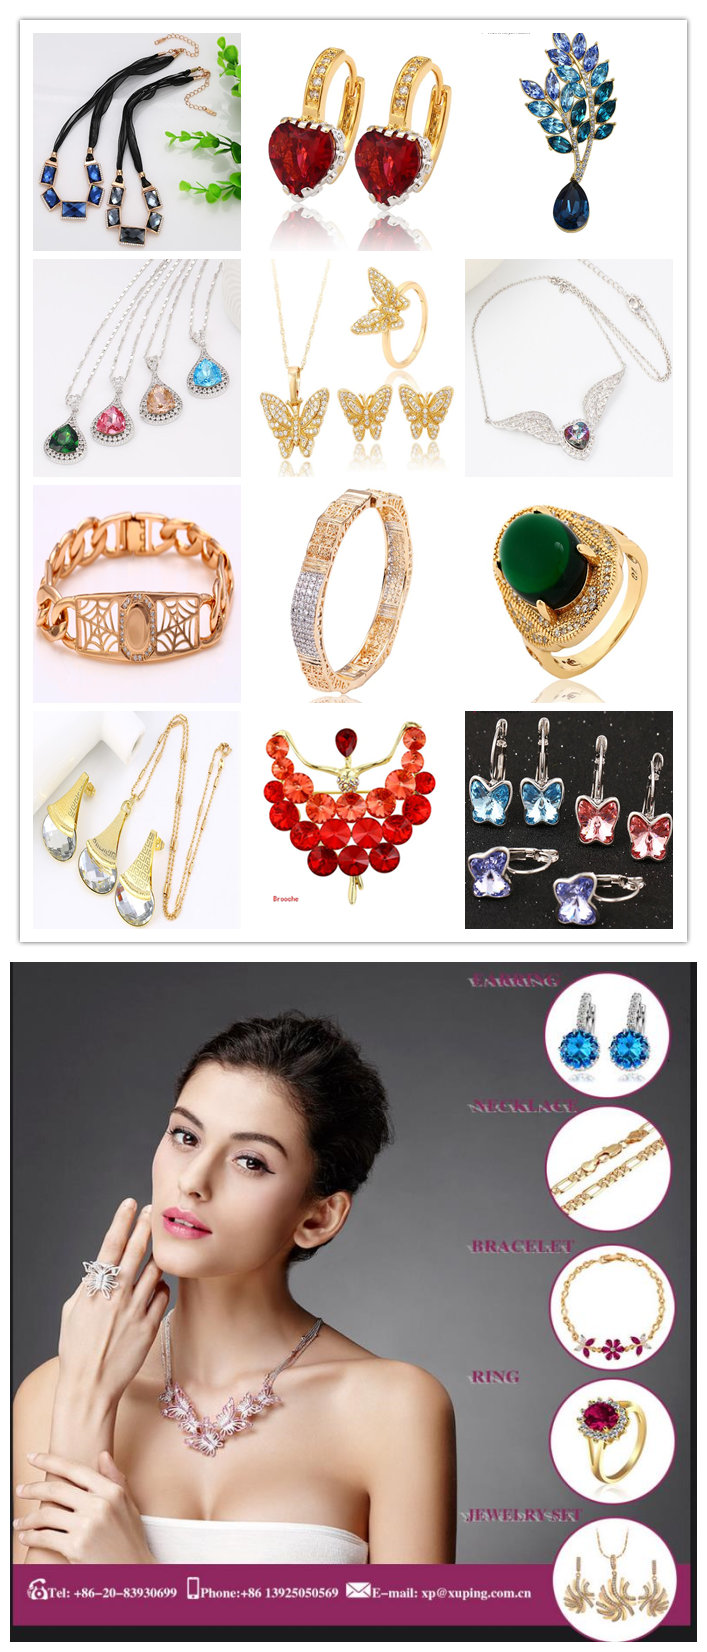 X0421002 - Xuping Fashion Luxury Rhodium CZ Crystals From Swarovski Jewelry Element Brooch